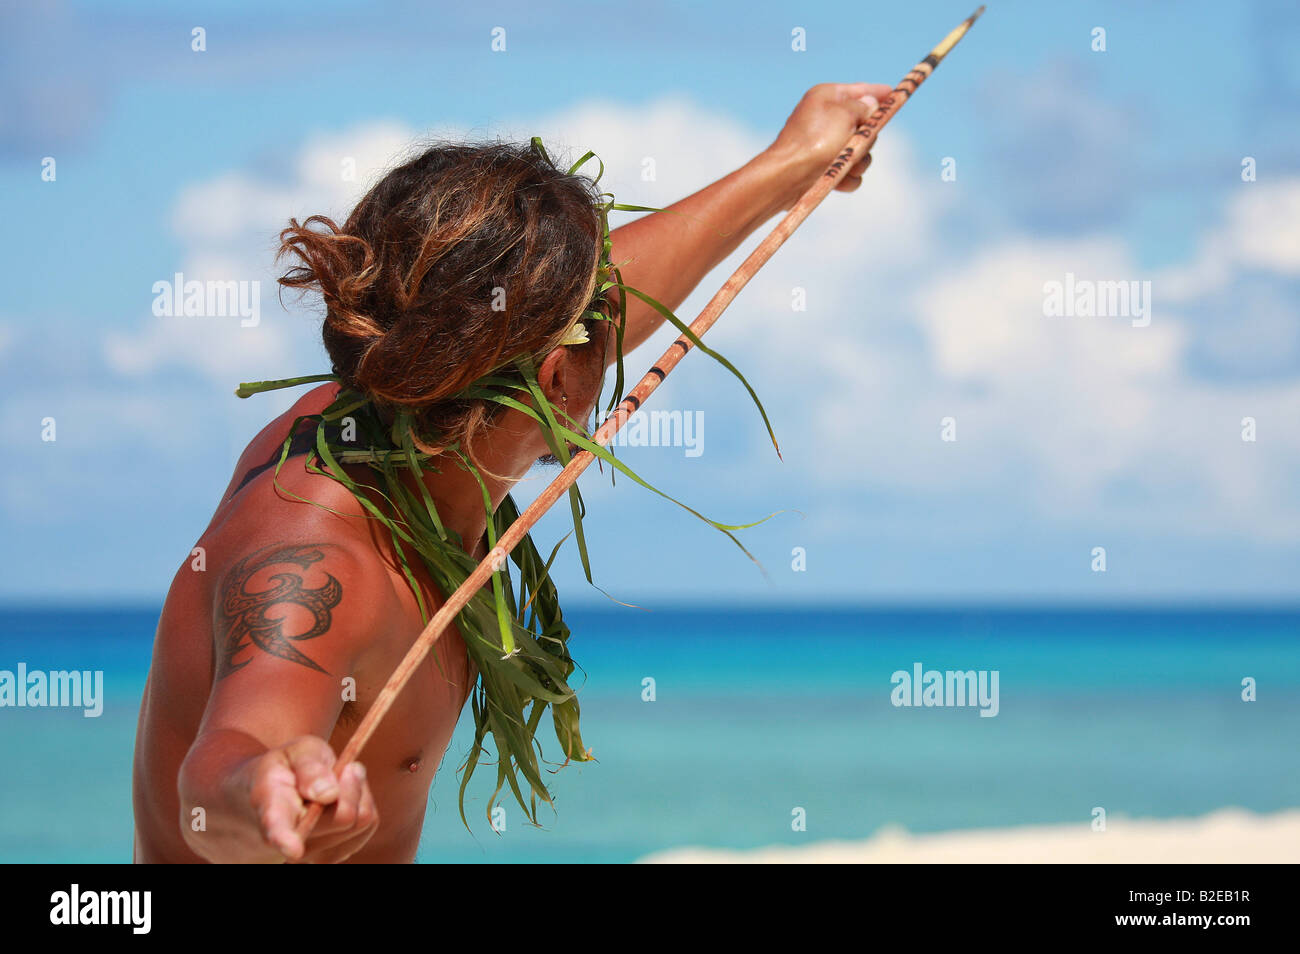 Close-up of male native holding spear, Tuamotus Archipelago, Polynesia Stock Photo